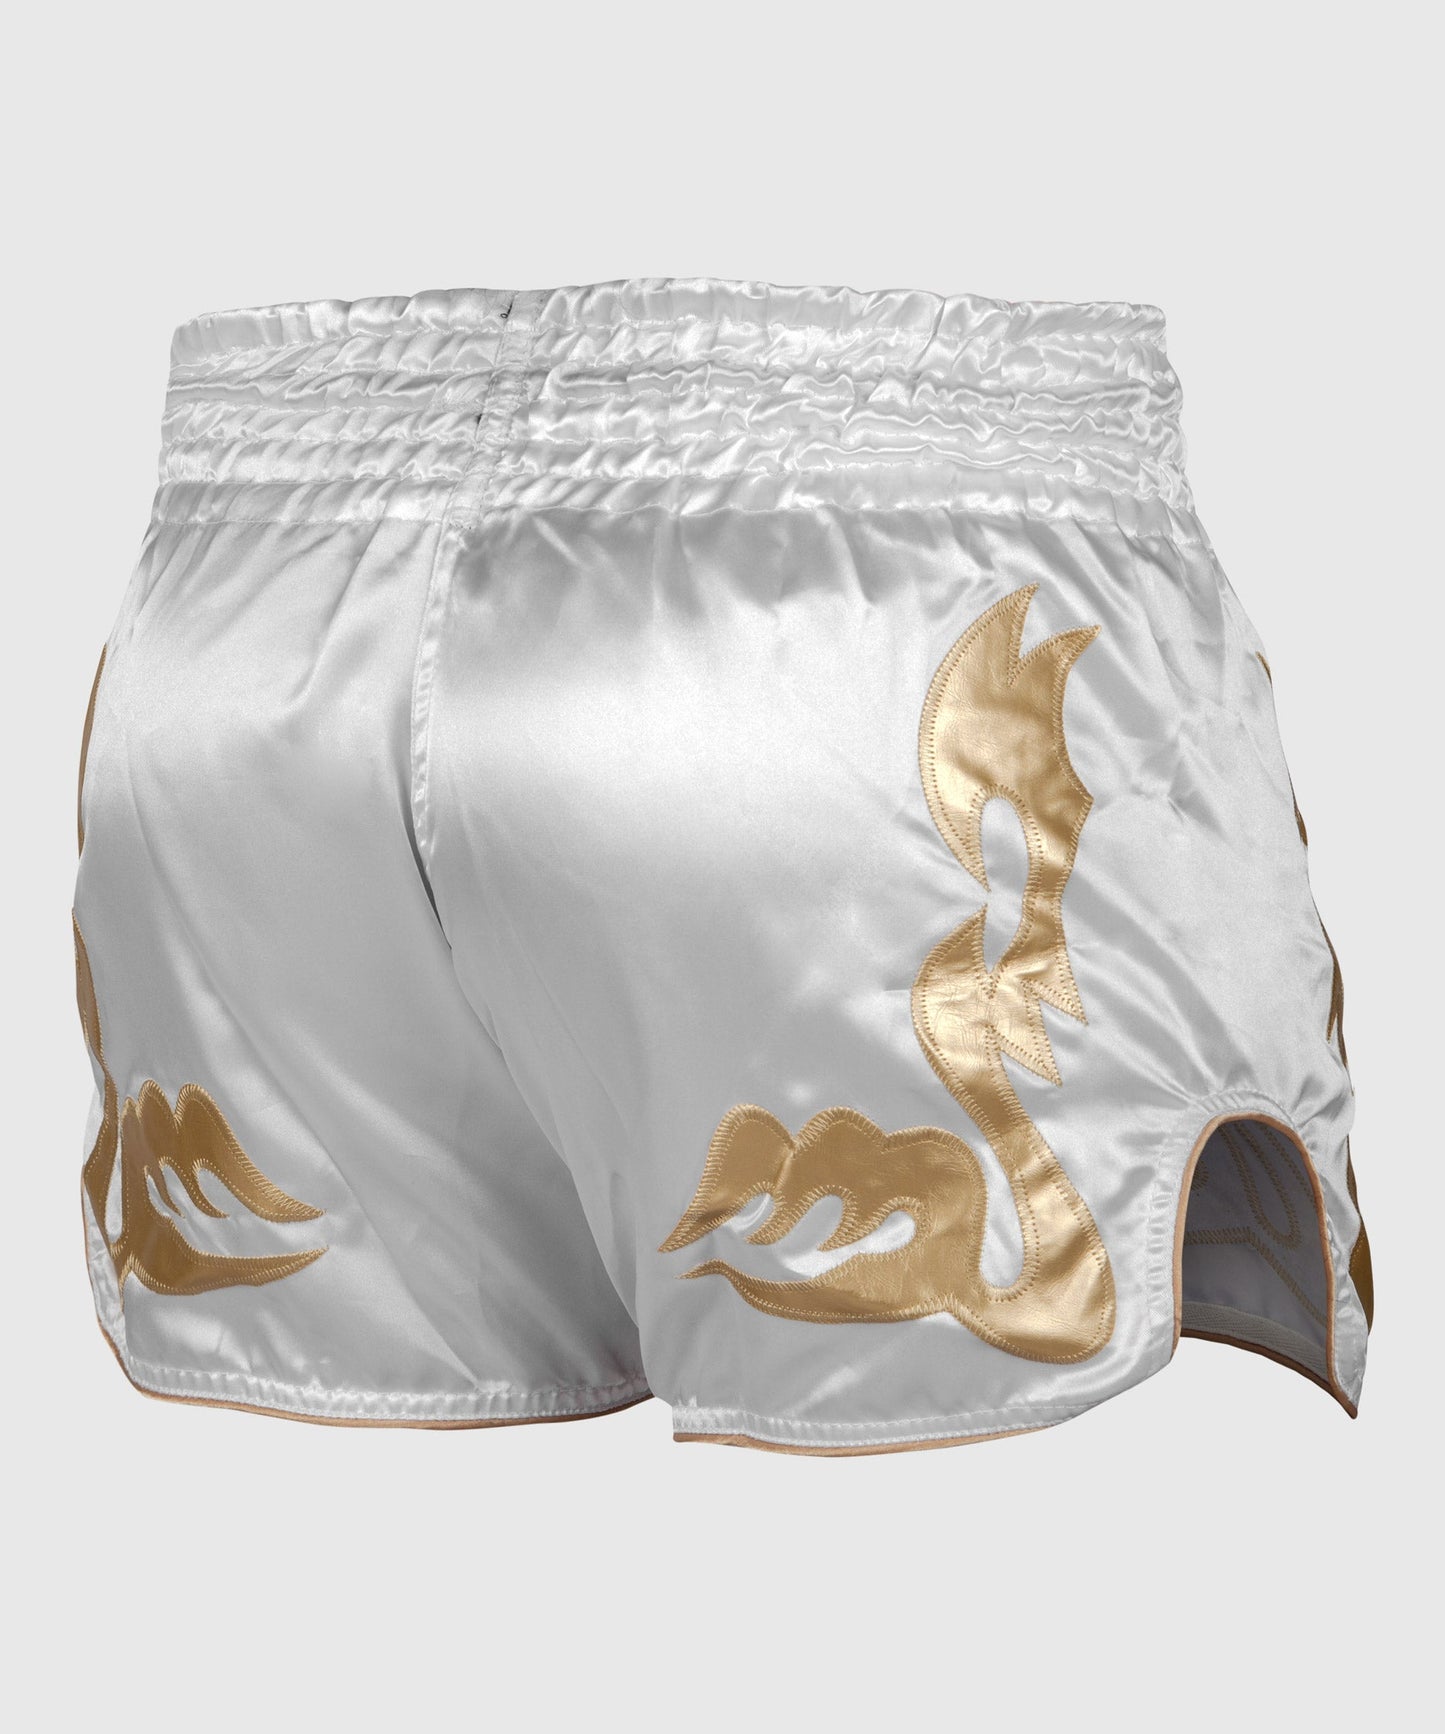 Venum Bangkok Inferno Muay Thai Shorts - White/Gold